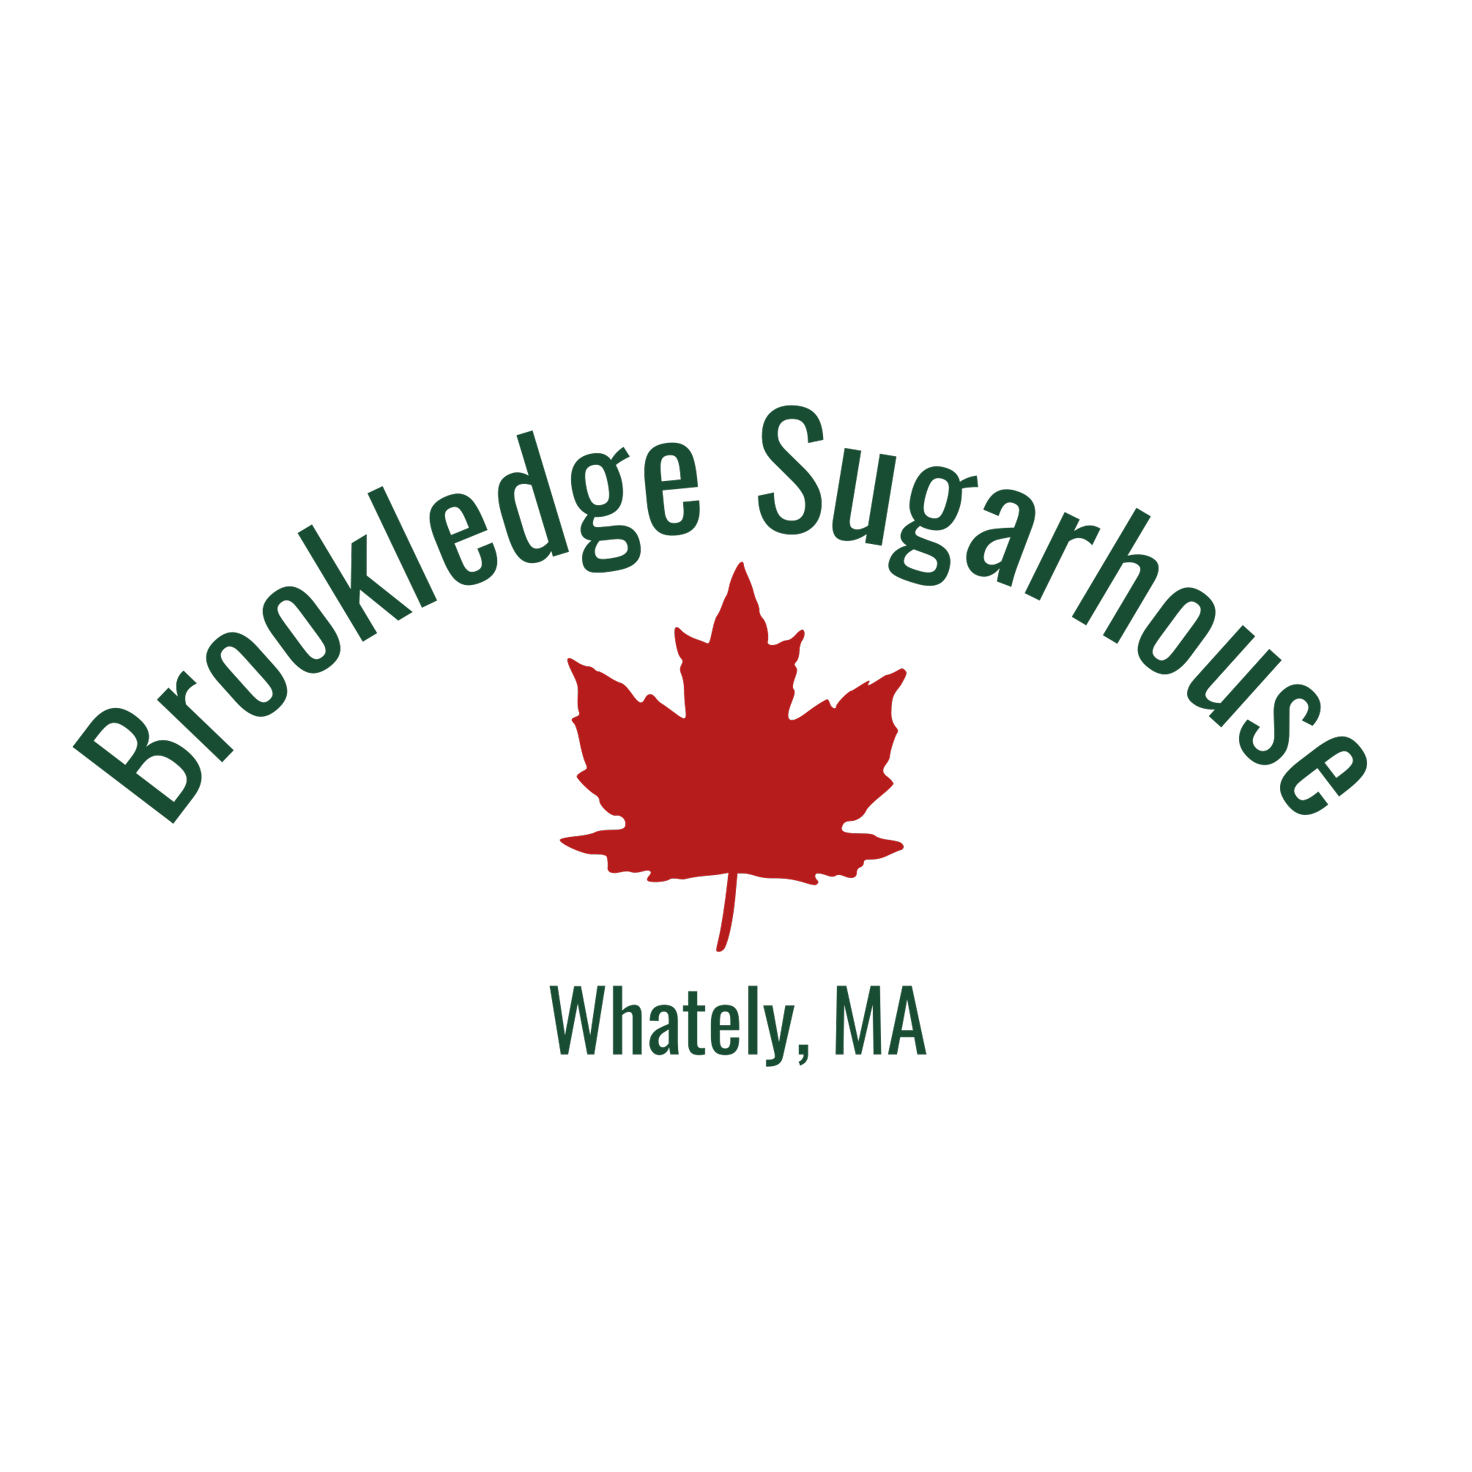 Brookledge Sugarhouse